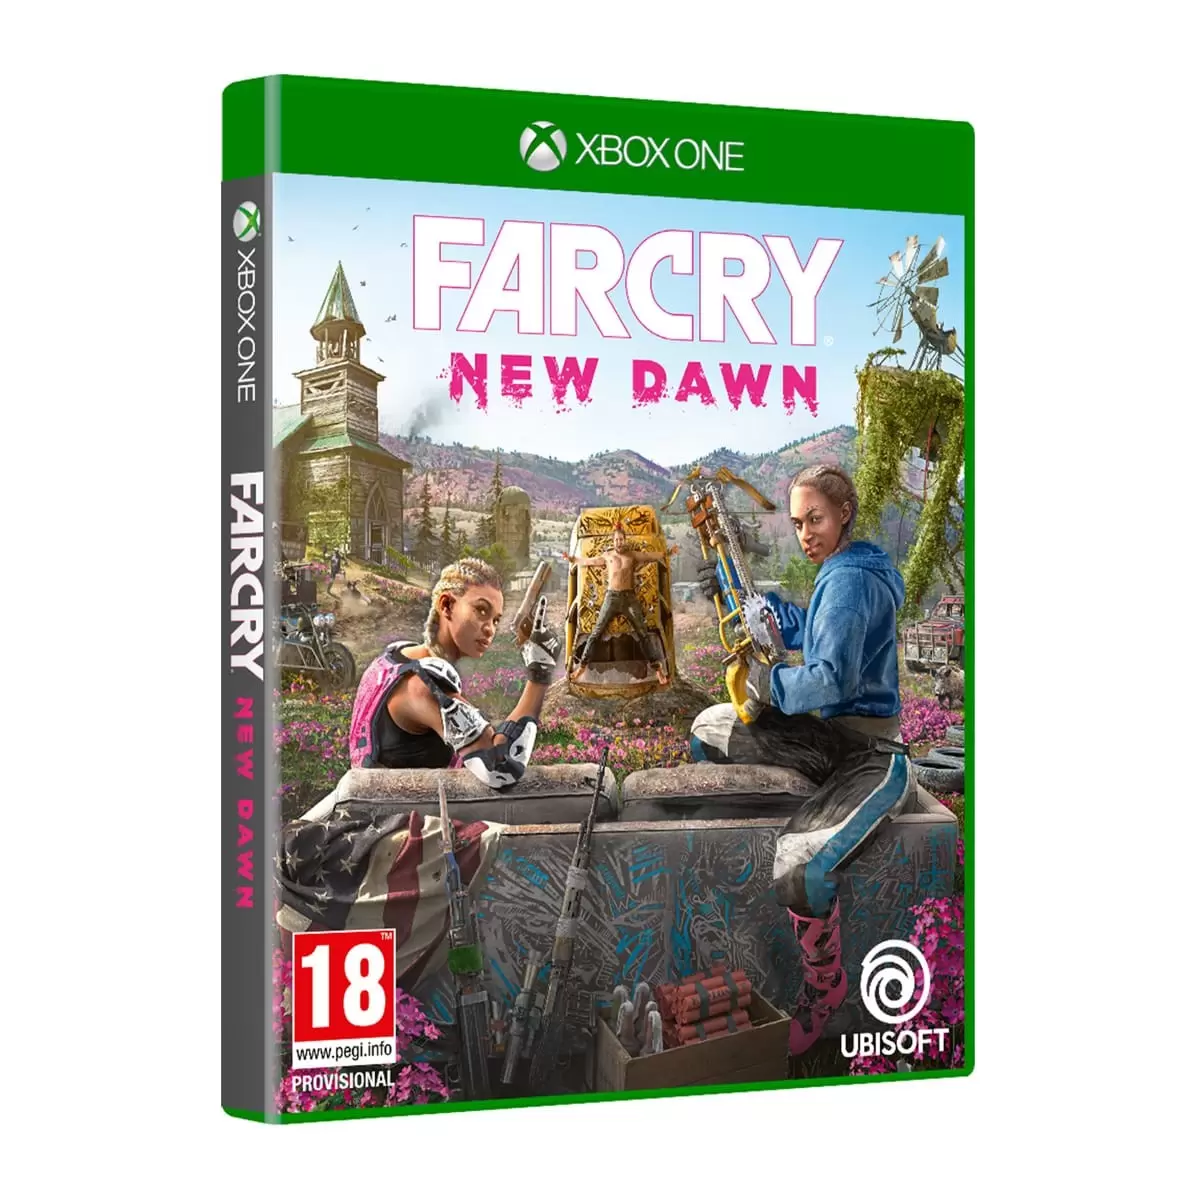 Jeux XBOX One - Far Cry New Dawn